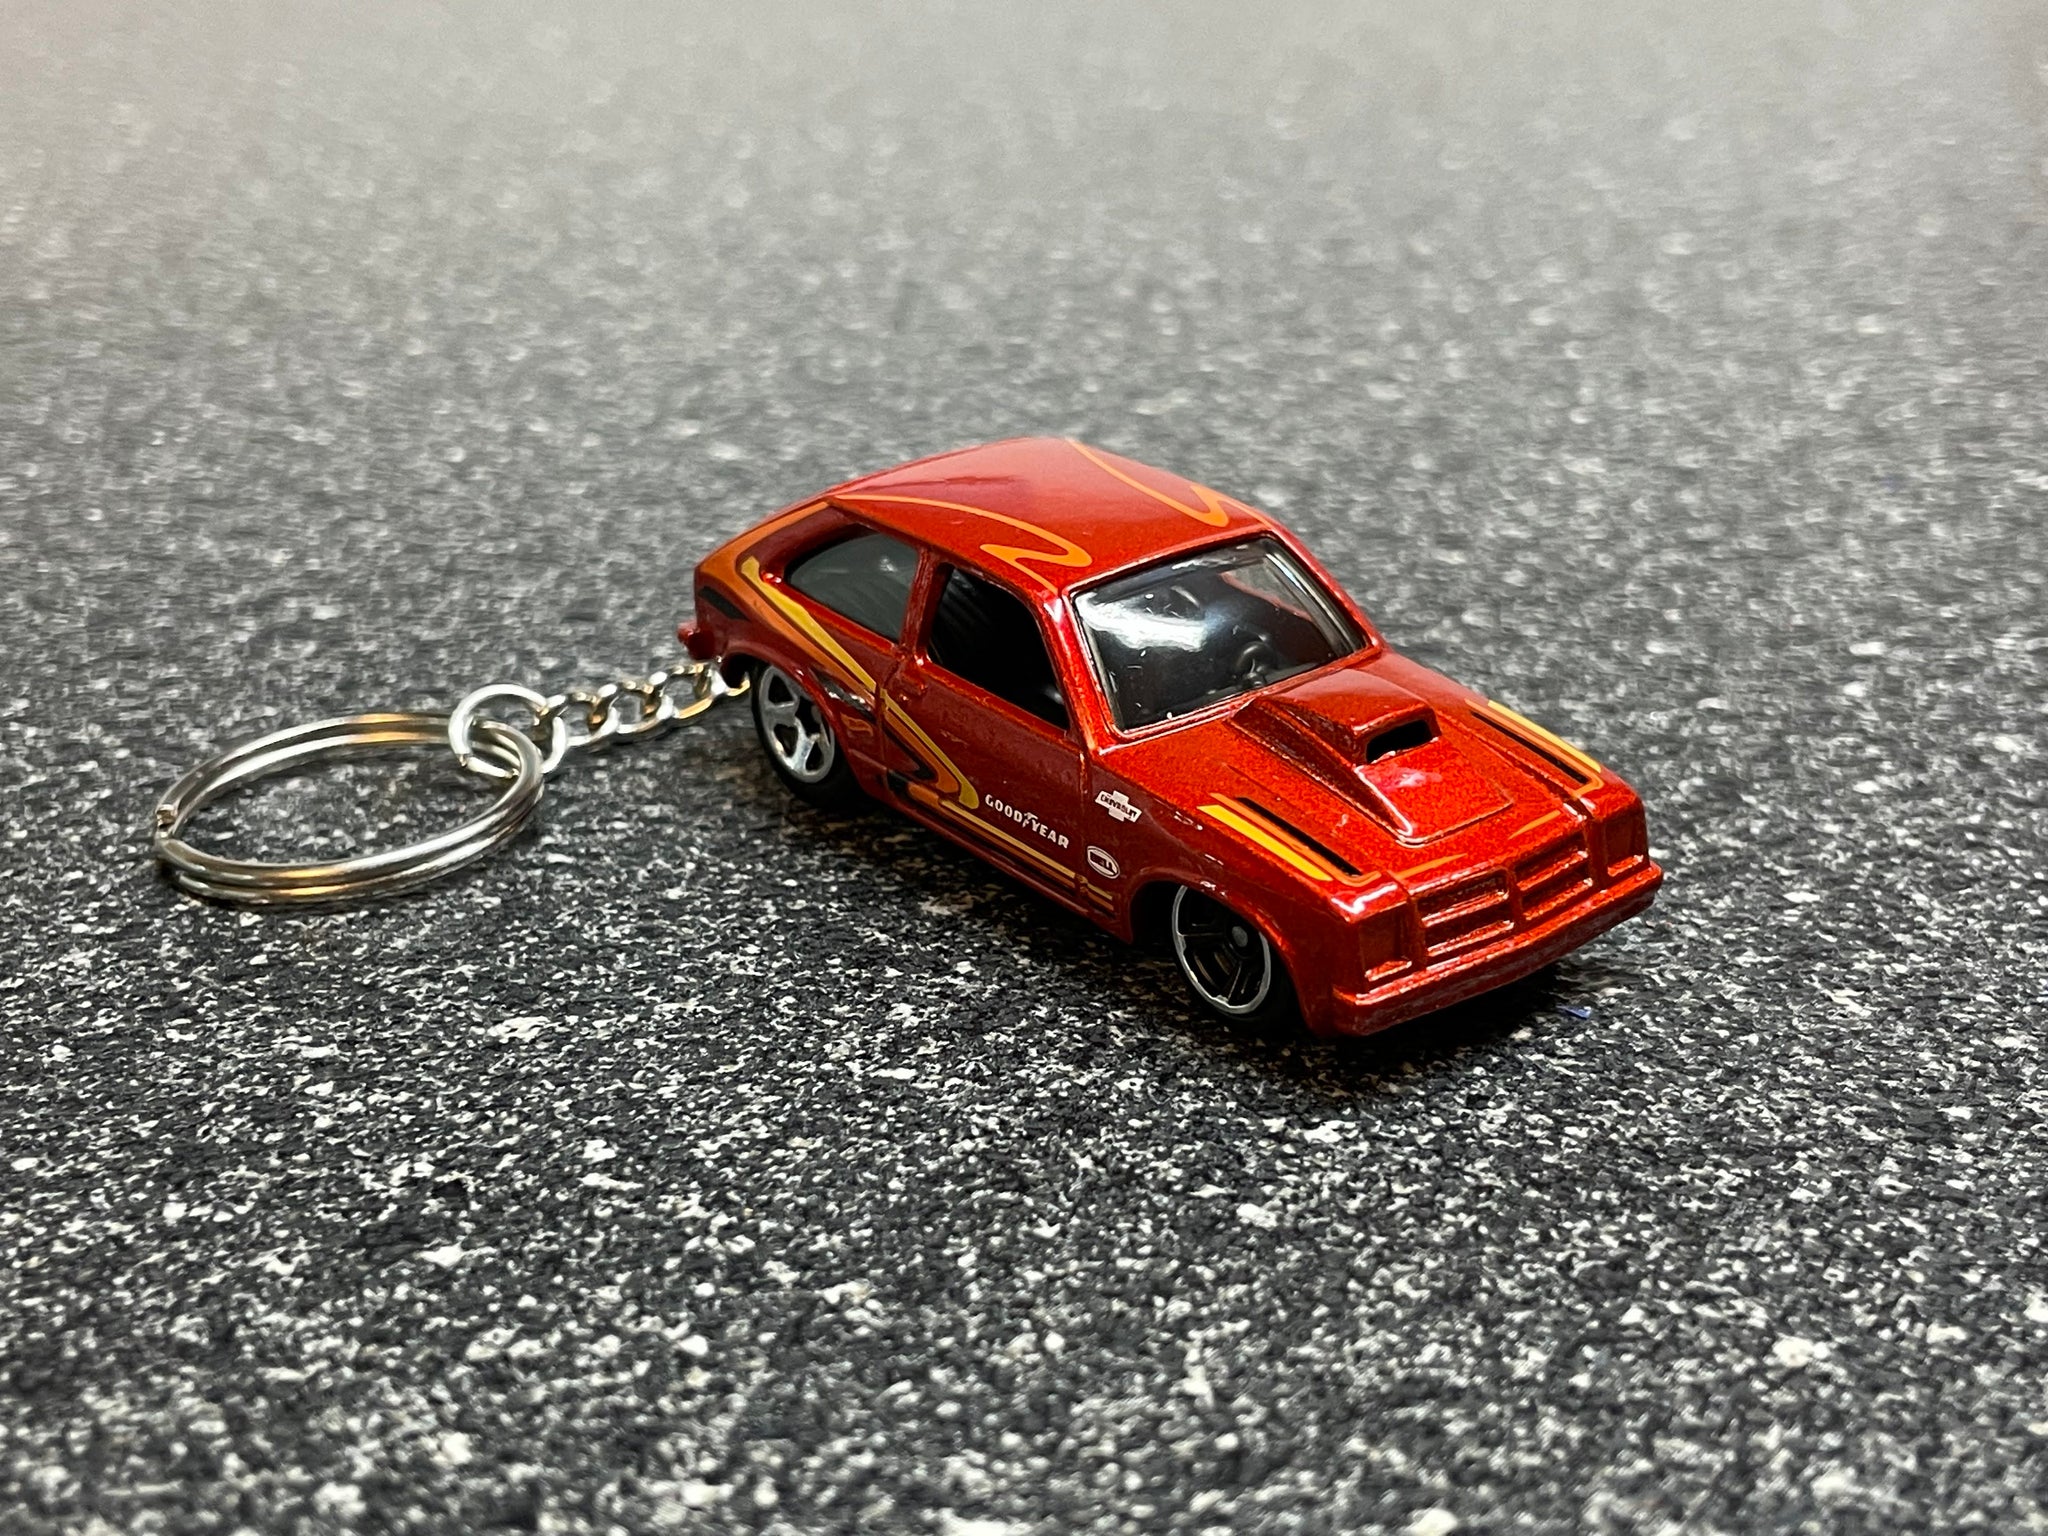 1976 Chevy Chevette Hot Rod Pro Stock Keychain Diecast Car Hot Wheels Matchbox